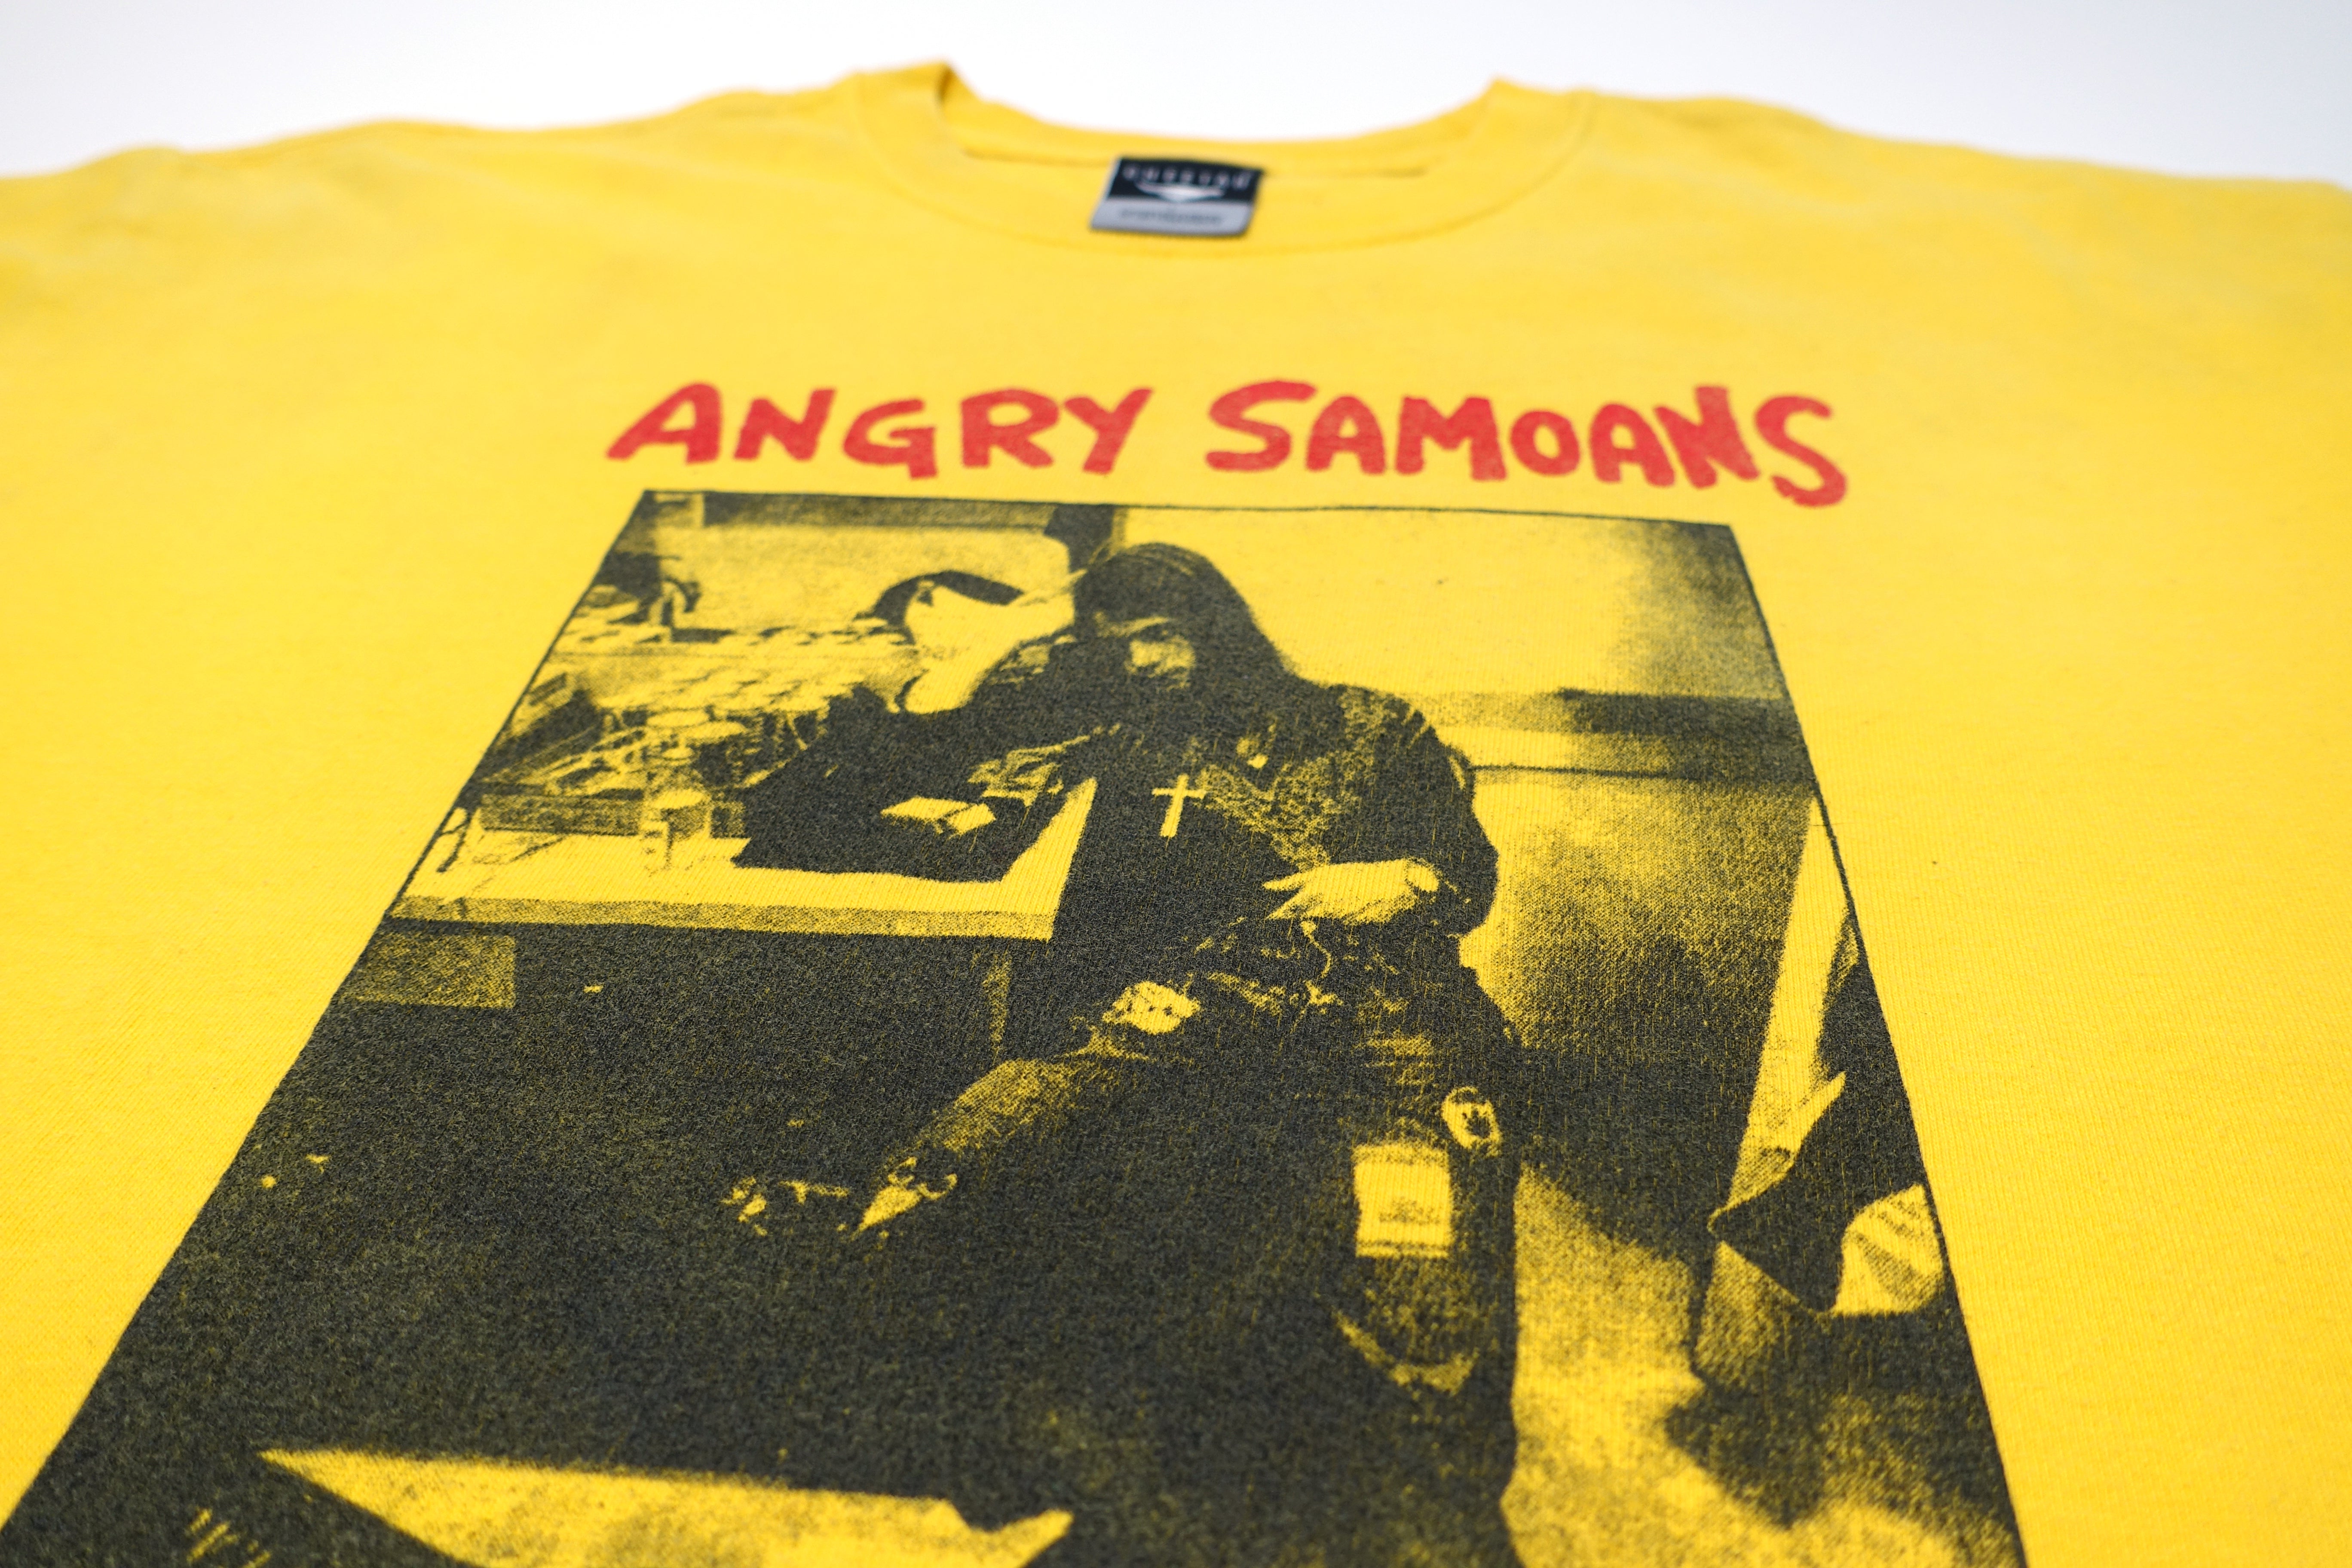 Angry Samoans – Black Sabbath / Ozzy 90's Tour Shirt Size Large